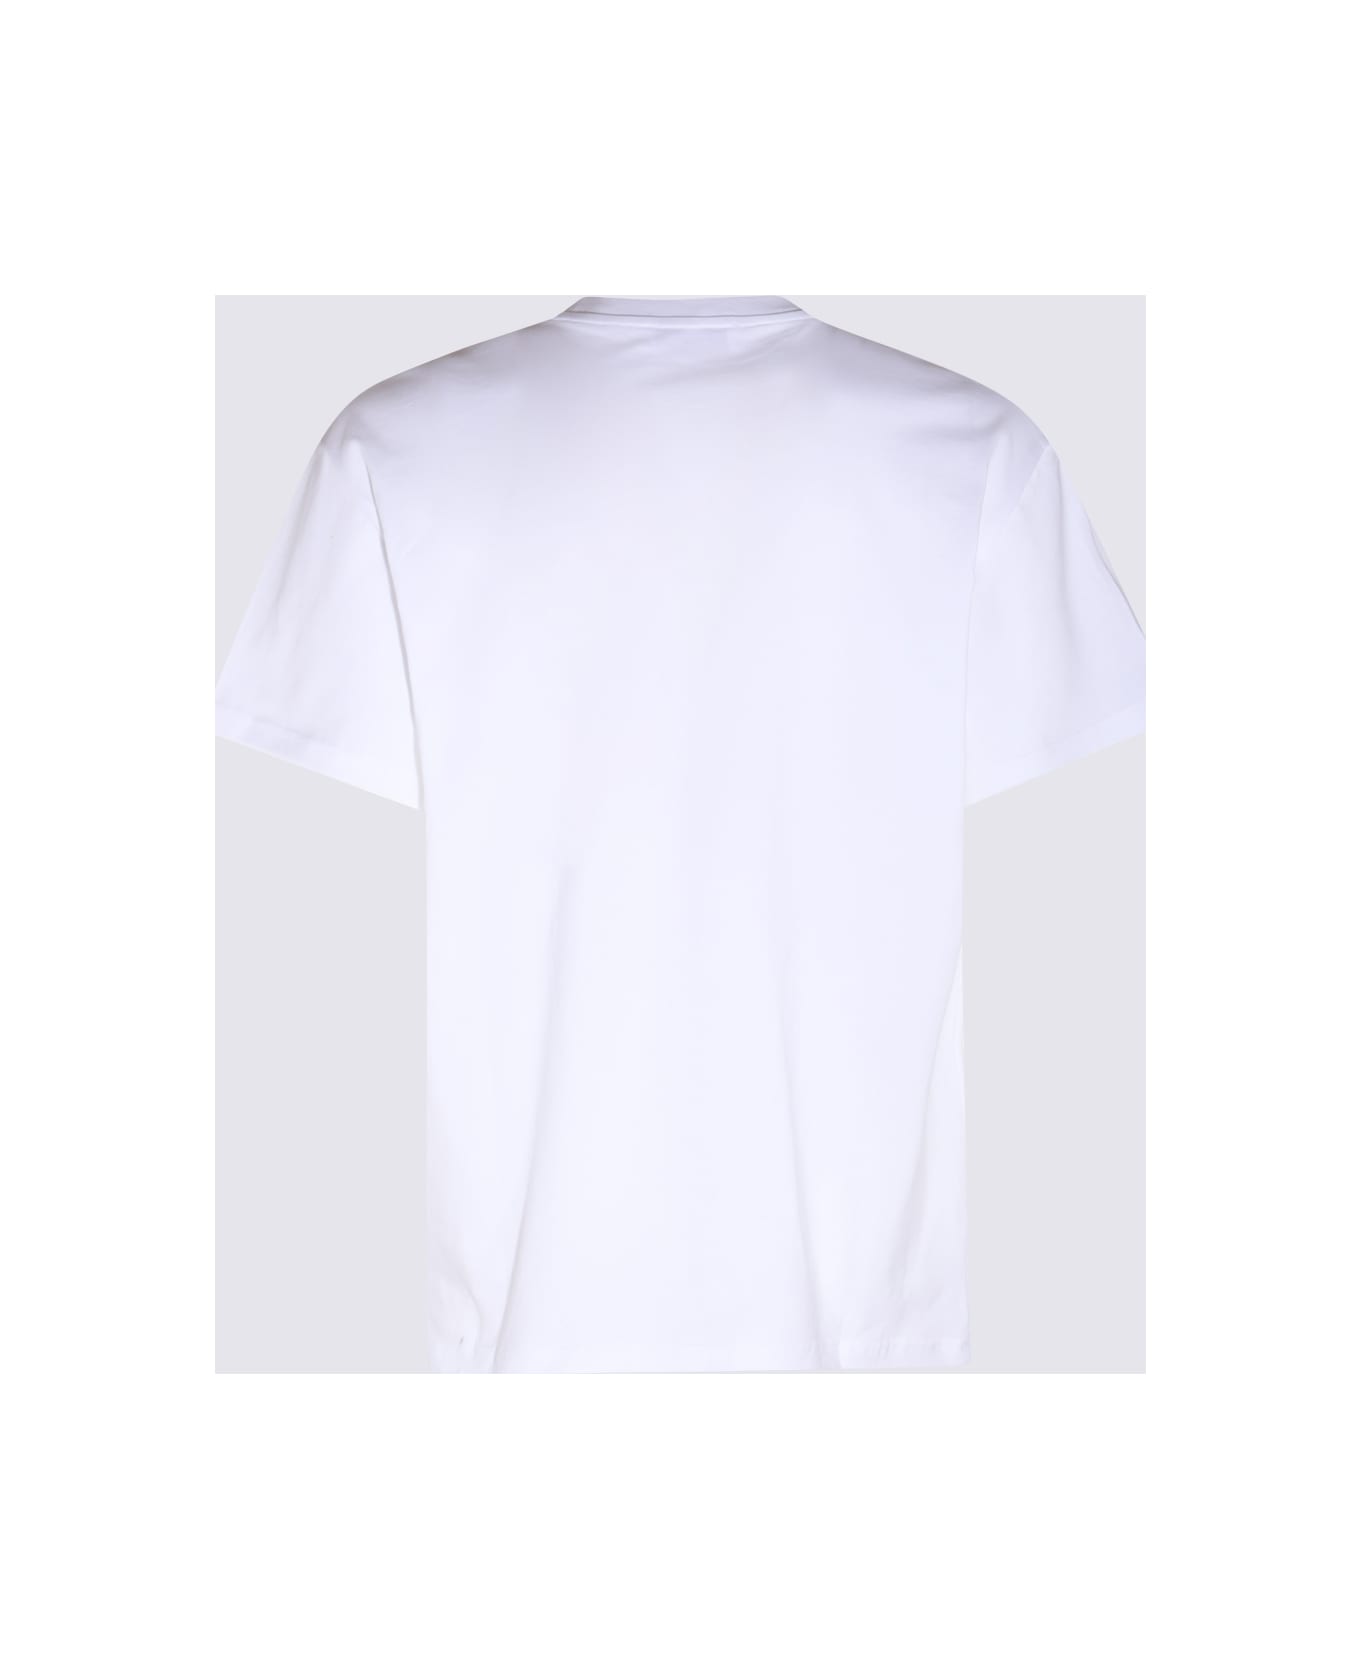 J.W. Anderson White Cotton Anchor T-shirt - White